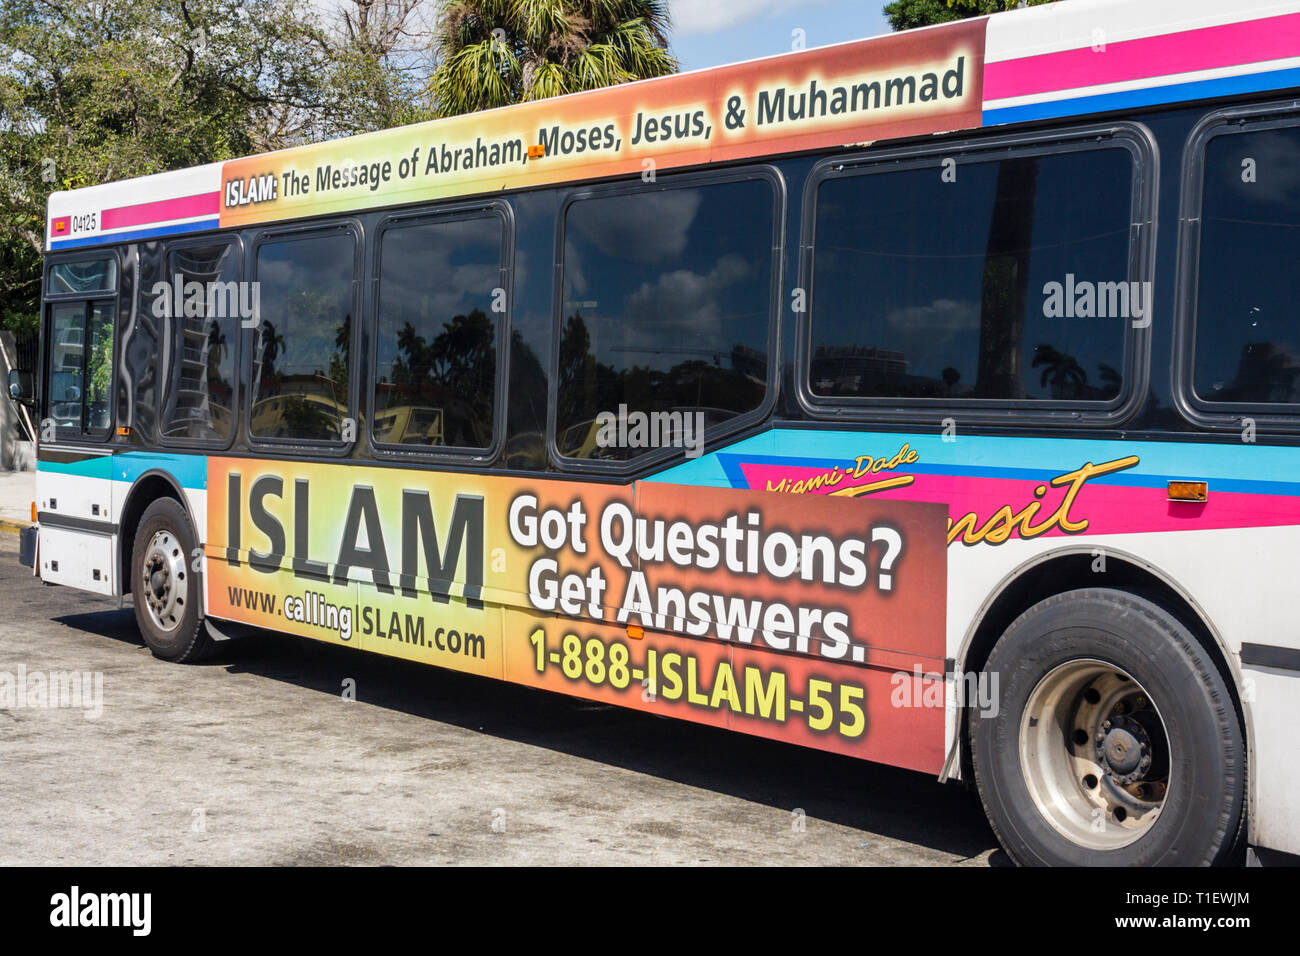 Miami Florida, Metrobus, Nahverkehr, Bus, Bus, Werbung, Werbung, Fahrzeugverpackung, Religion, Religion, Religion, Islam, kontrovers, Muhammad, gebührenfreie Nummer, Rekrutin Stockfoto